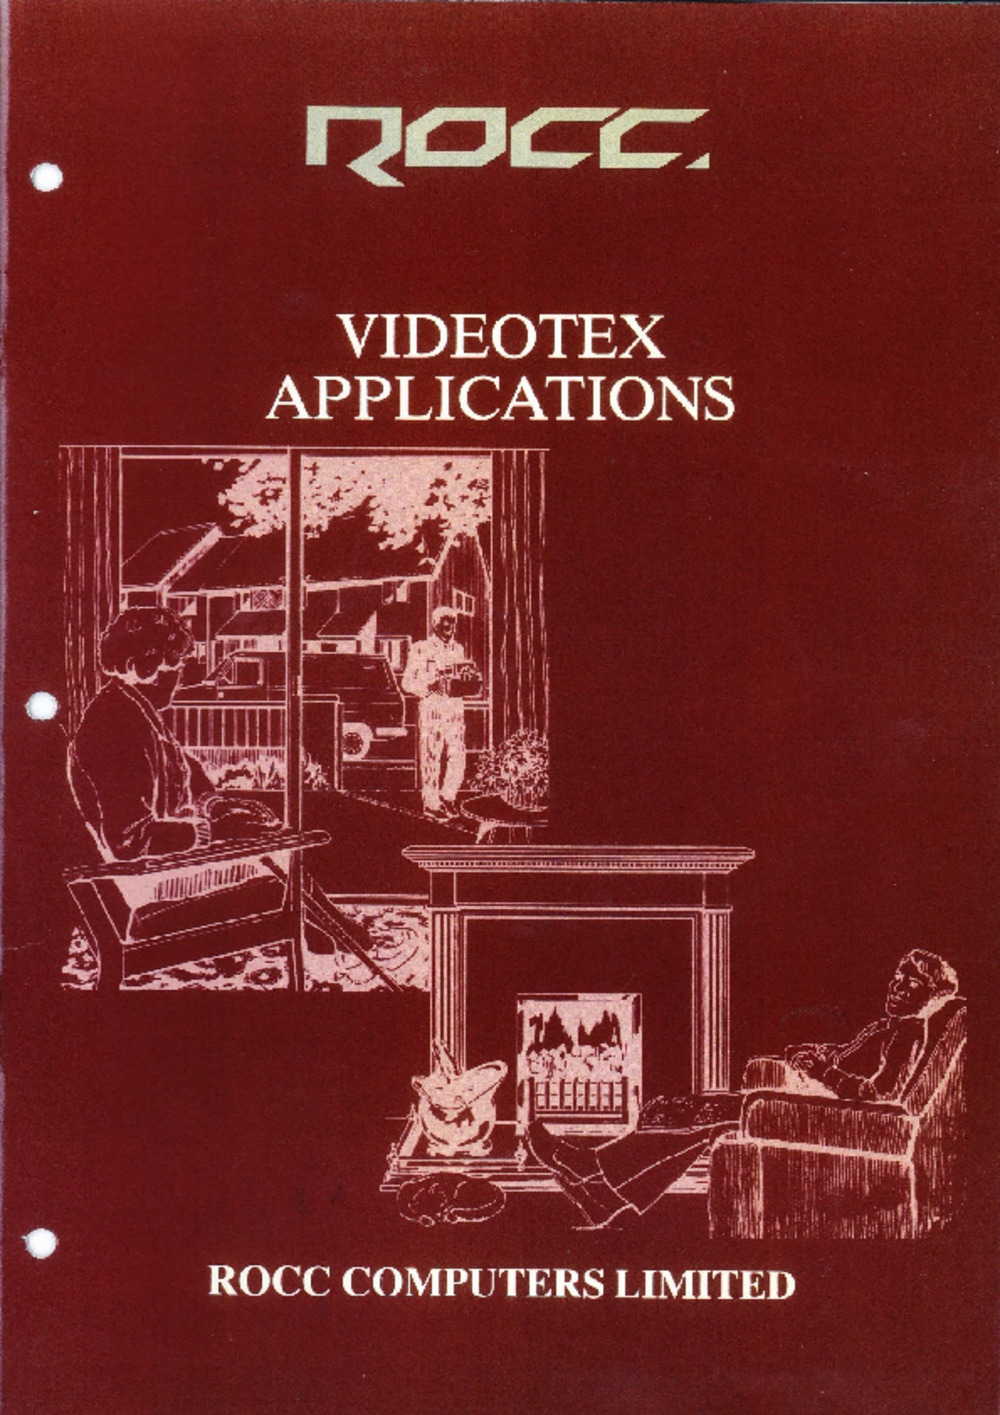 Article: ROCC Videotex Applications Brochure